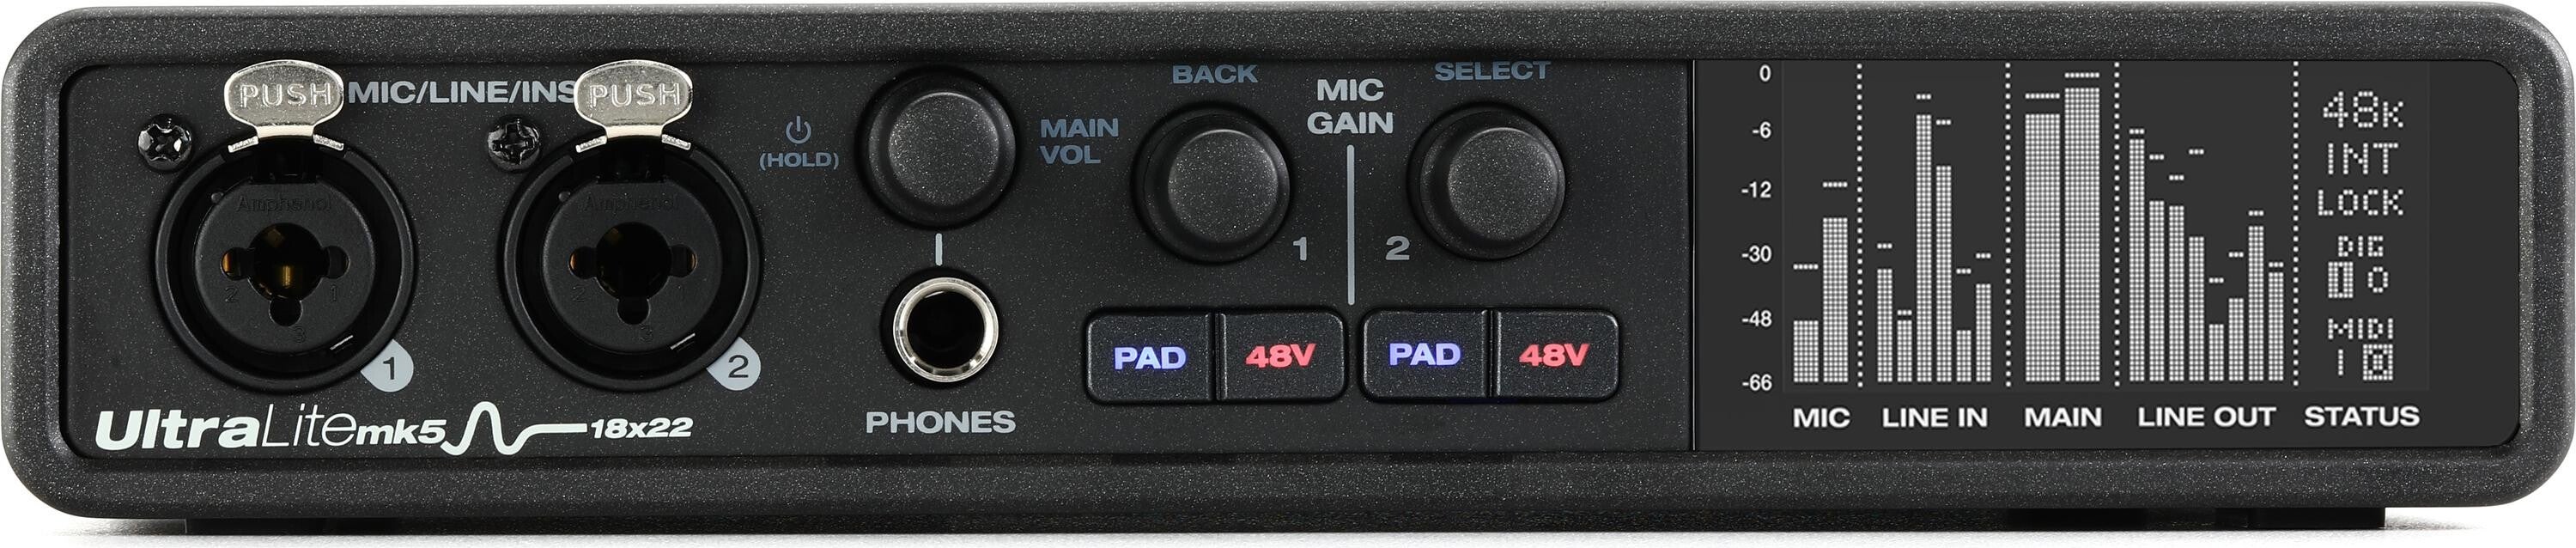 MOTU 8pre 16x12 USB Audio Interface | Sweetwater